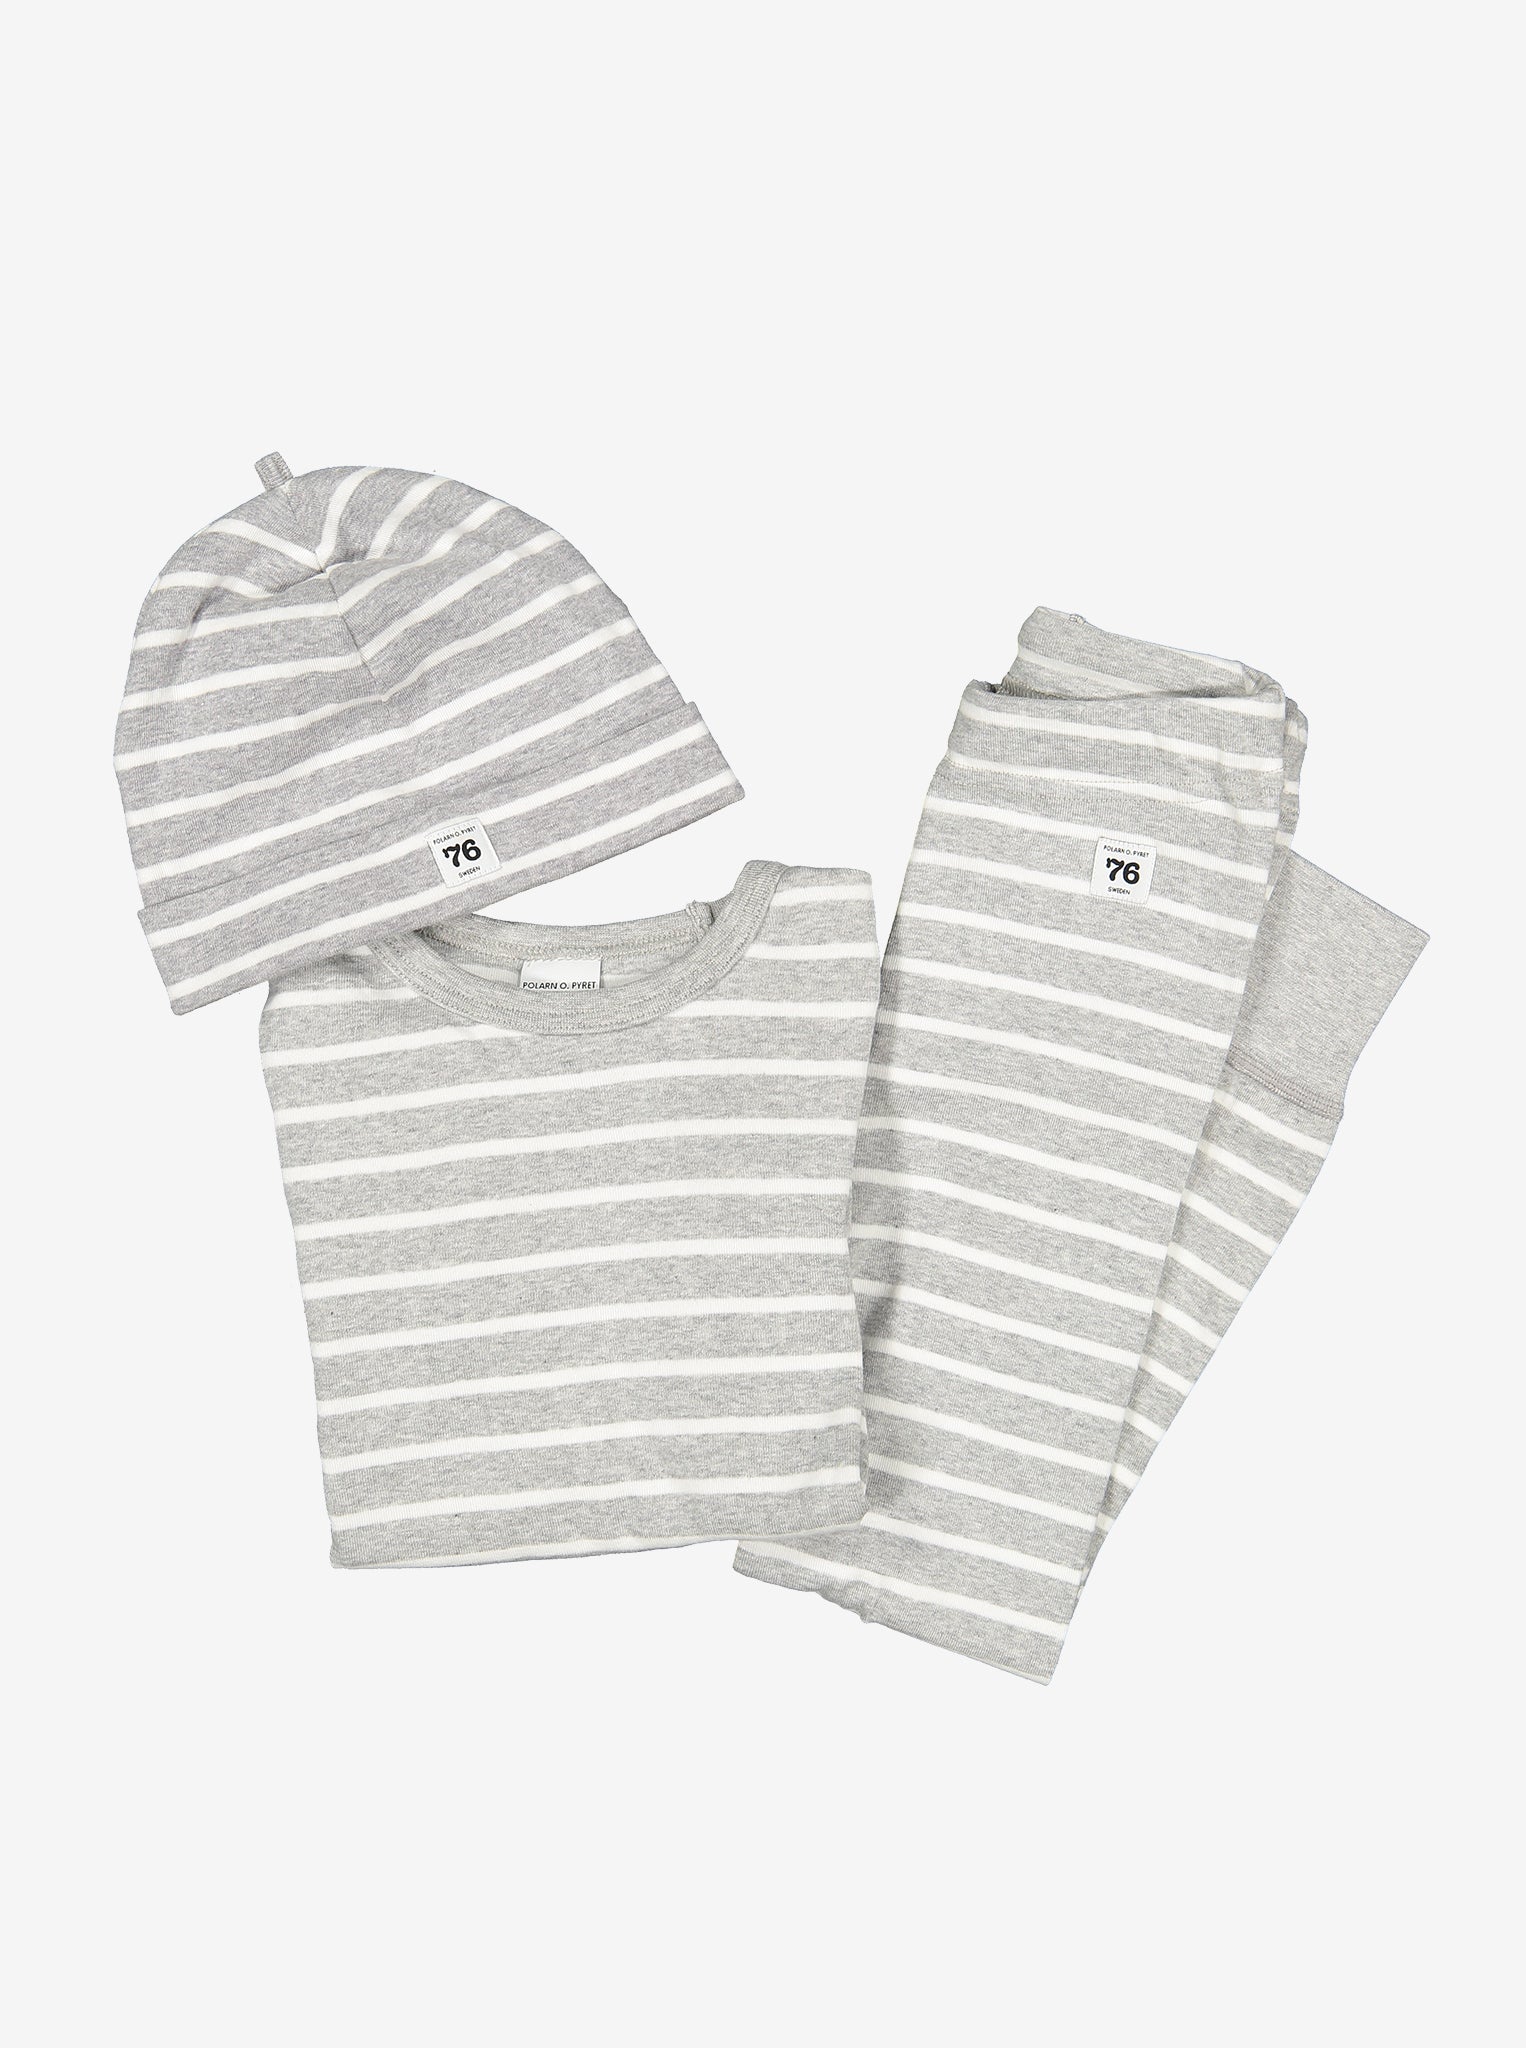 grey and white stripes kids leggings, ethical organic cotton, long lasting polarn o. pyret quality